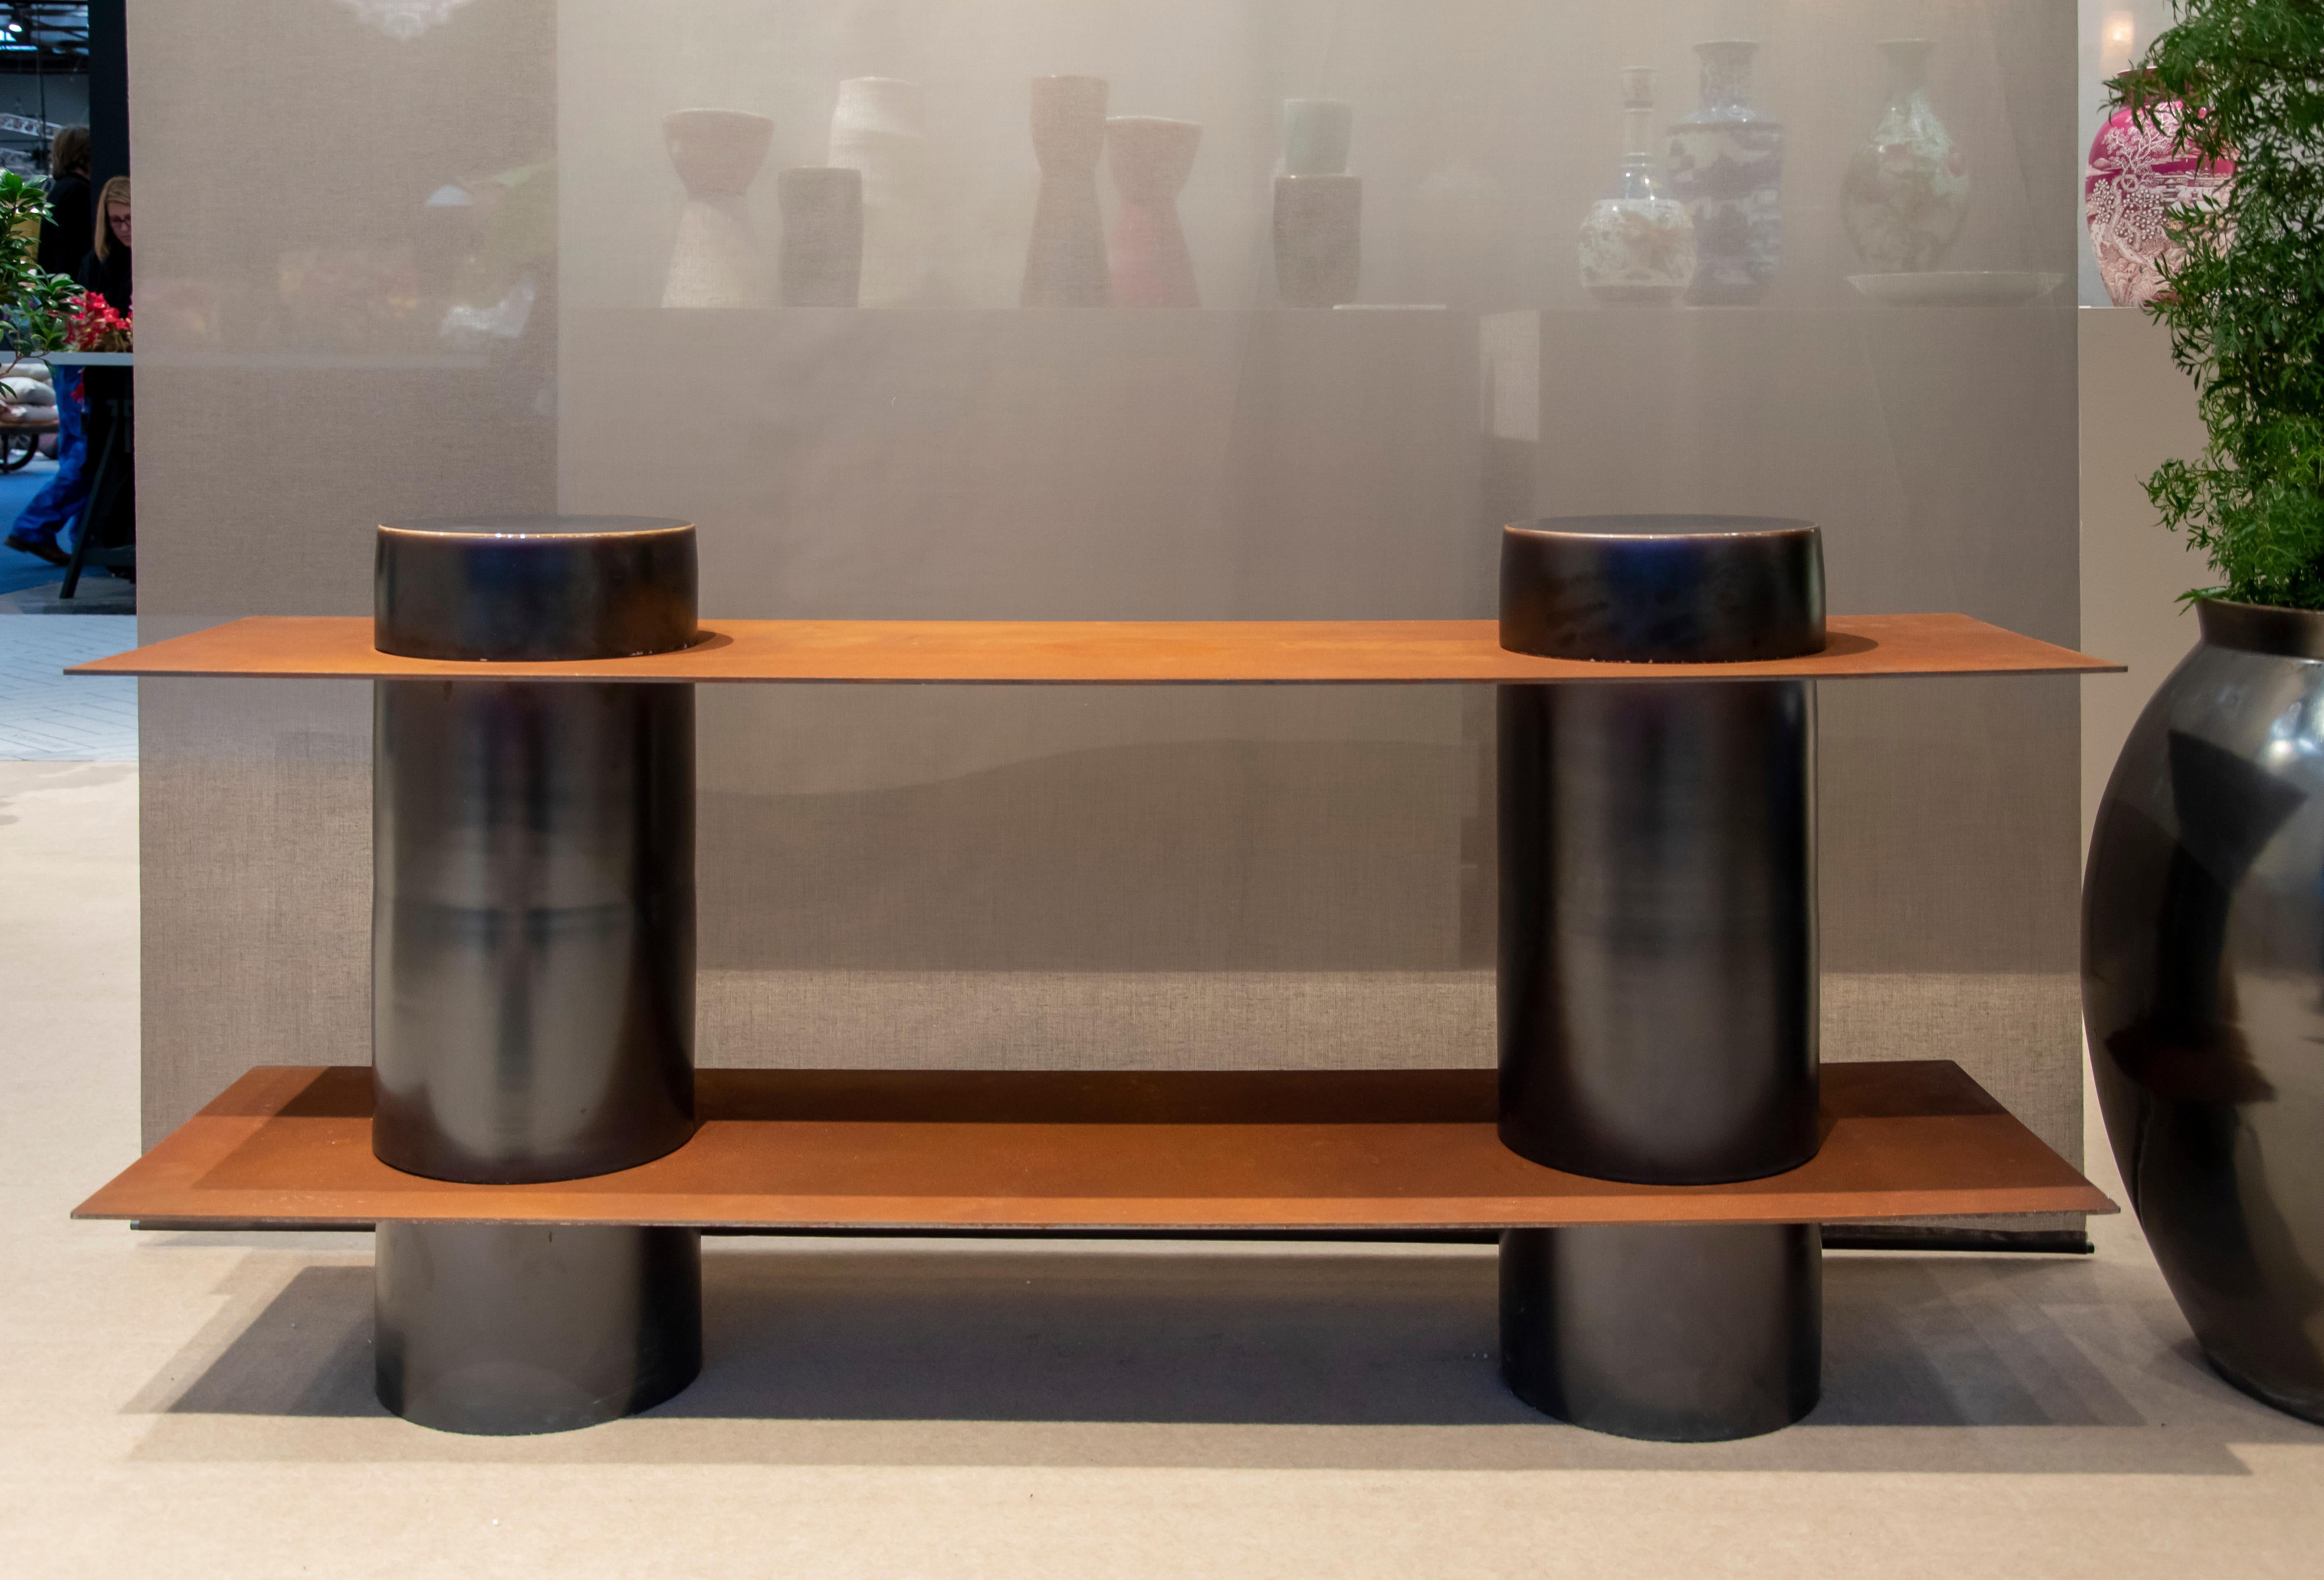 Column '2 lev' Contemporary Shelf in Porcelain and Corten Steel 2